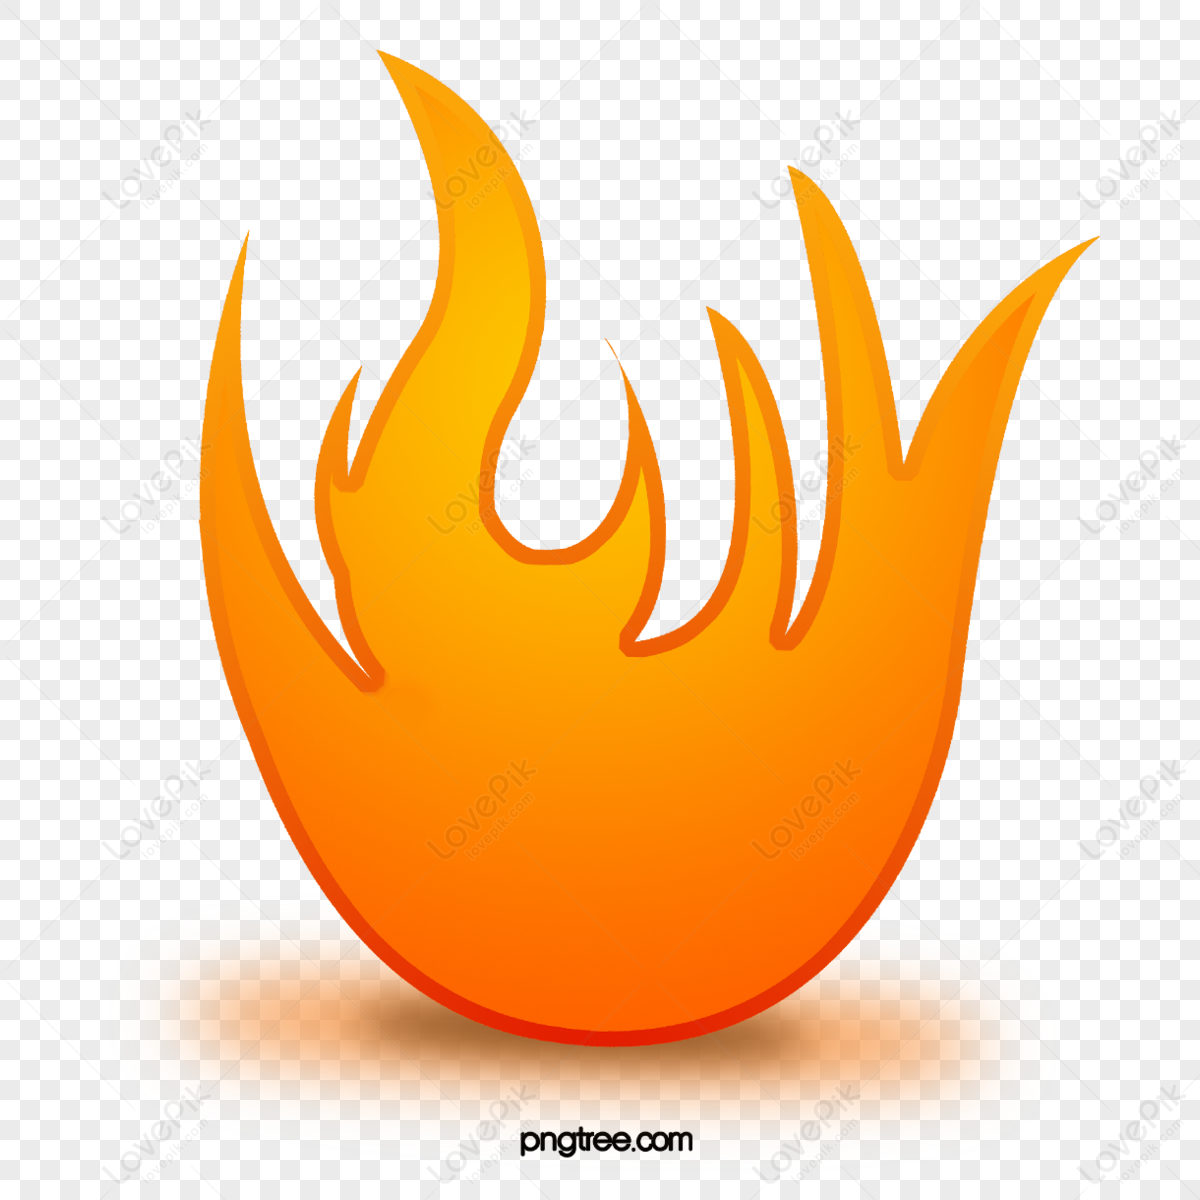 White Free Fire Logo Battlegrounds | Citypng